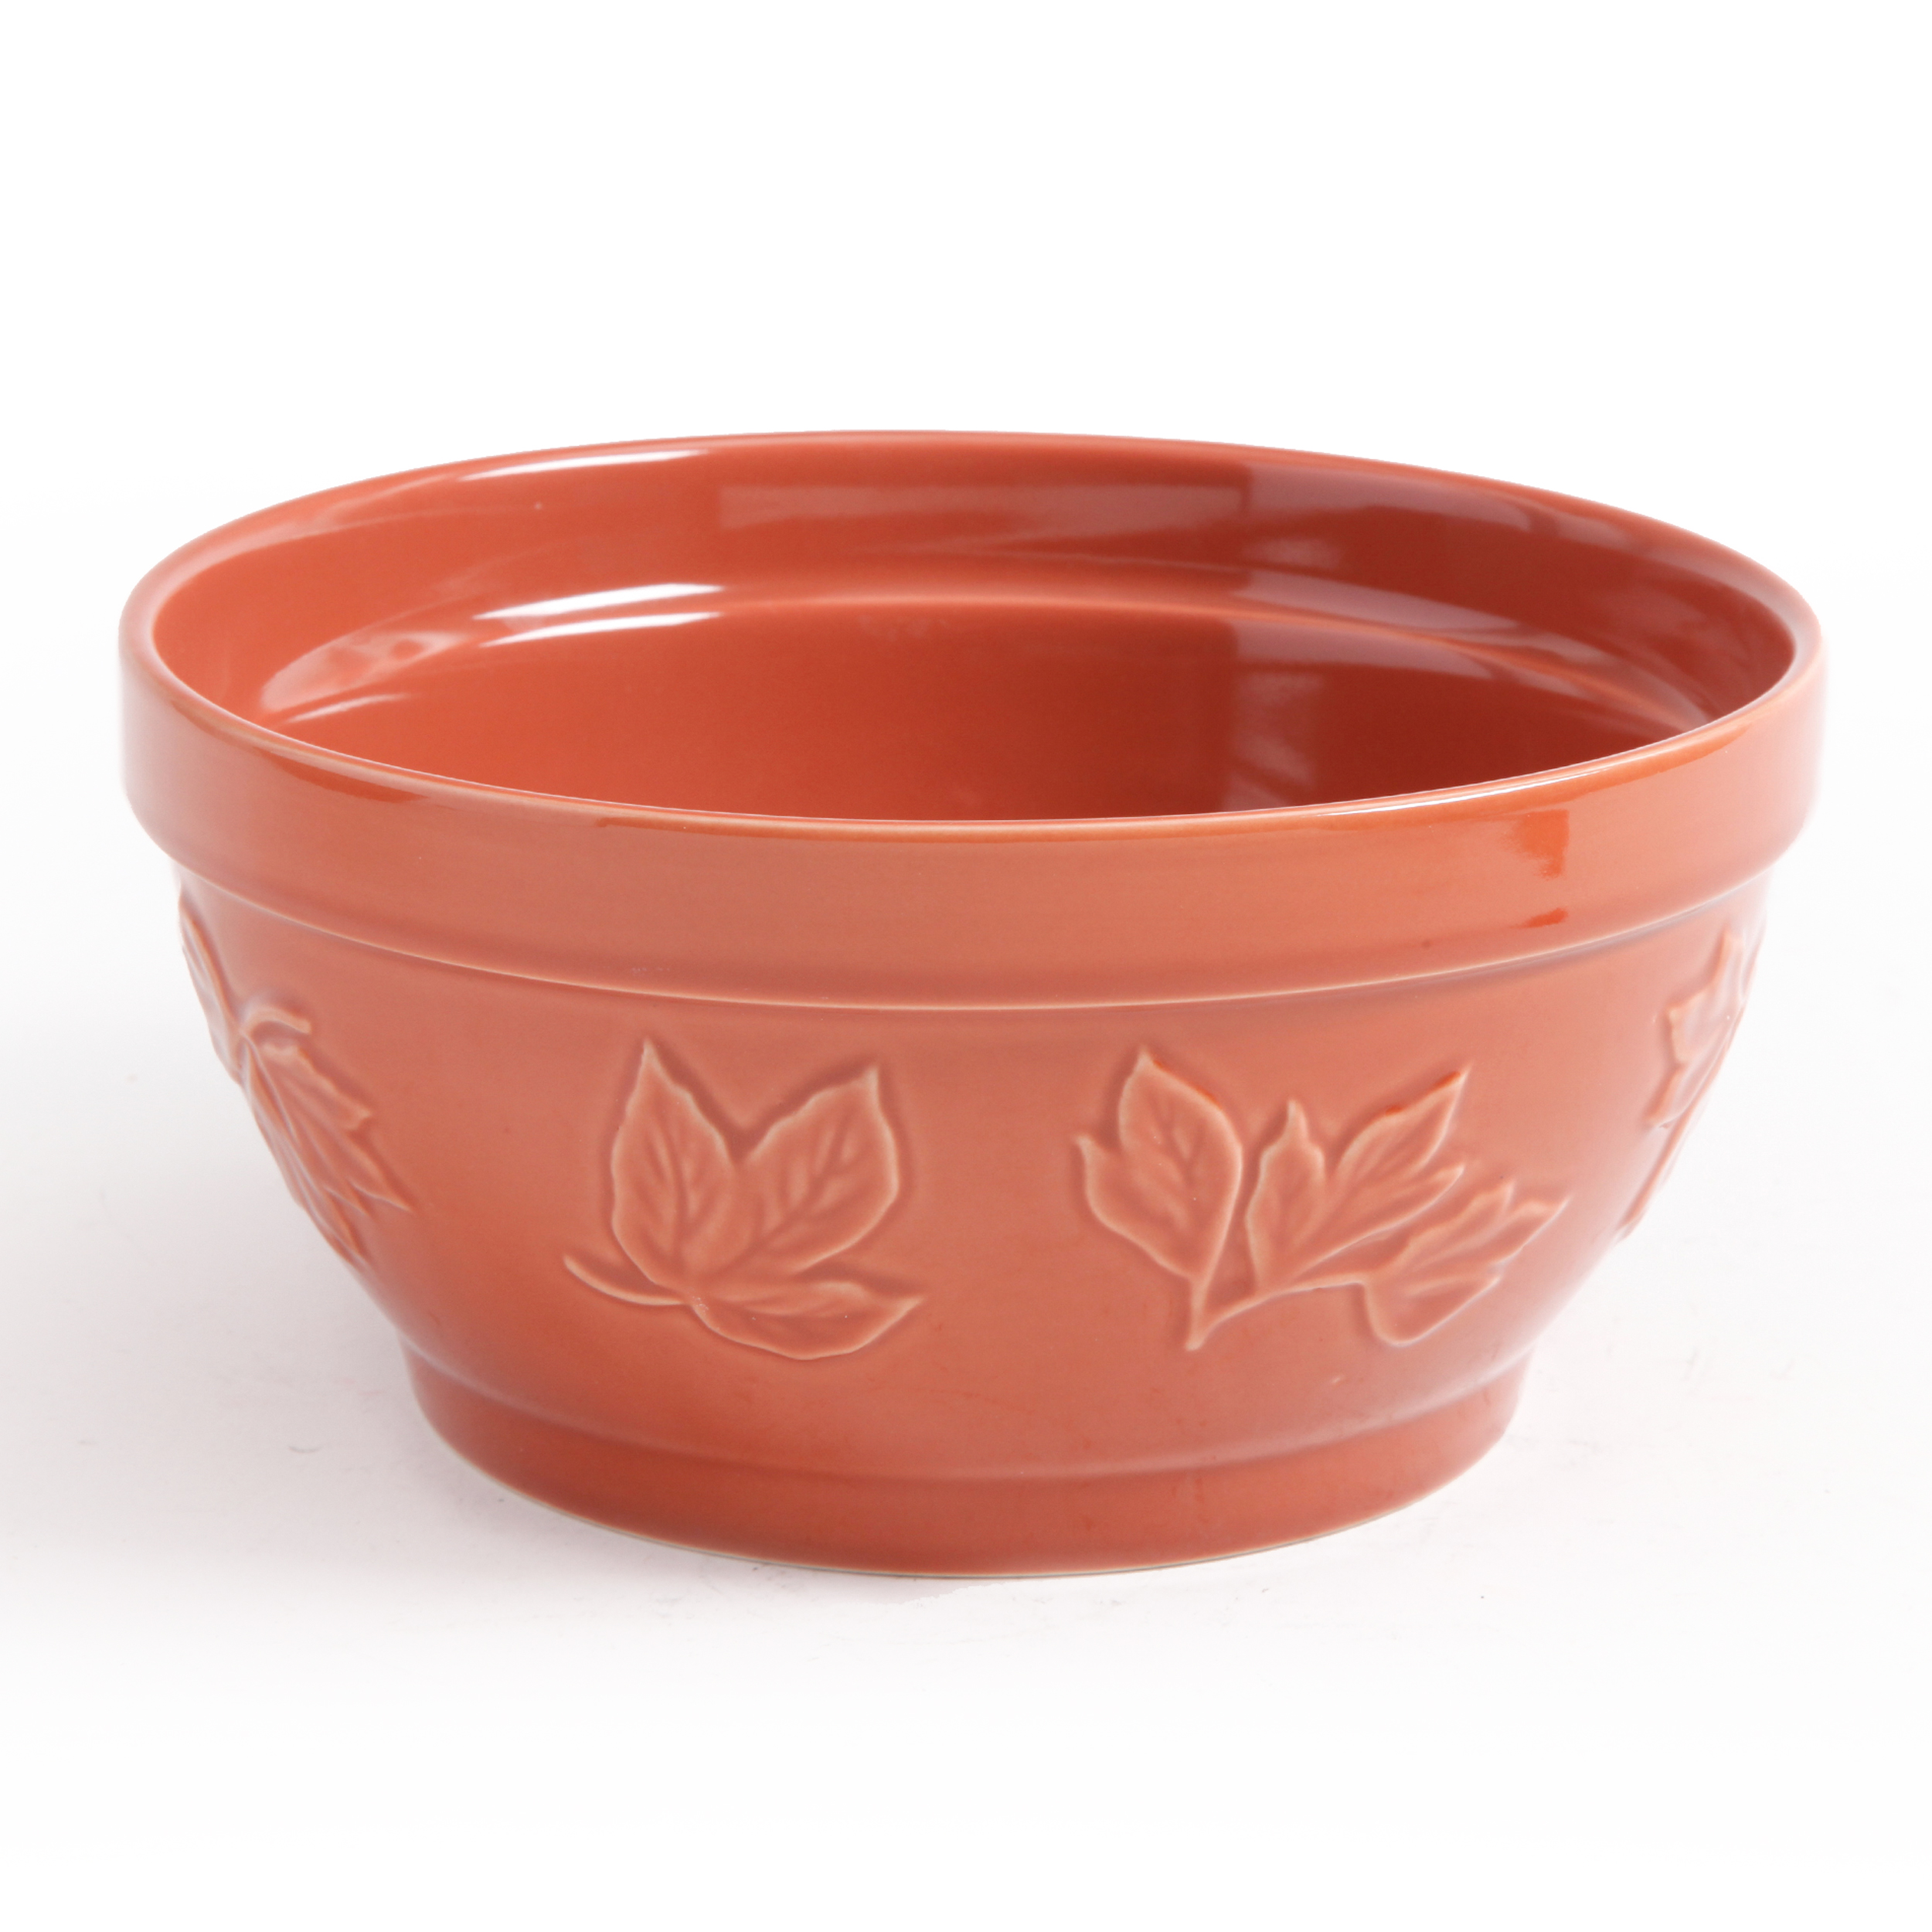 The Pioneer Woman Cornucopia Ceramic Mixing Bowl Set, 3 Piece - image 5 of 5